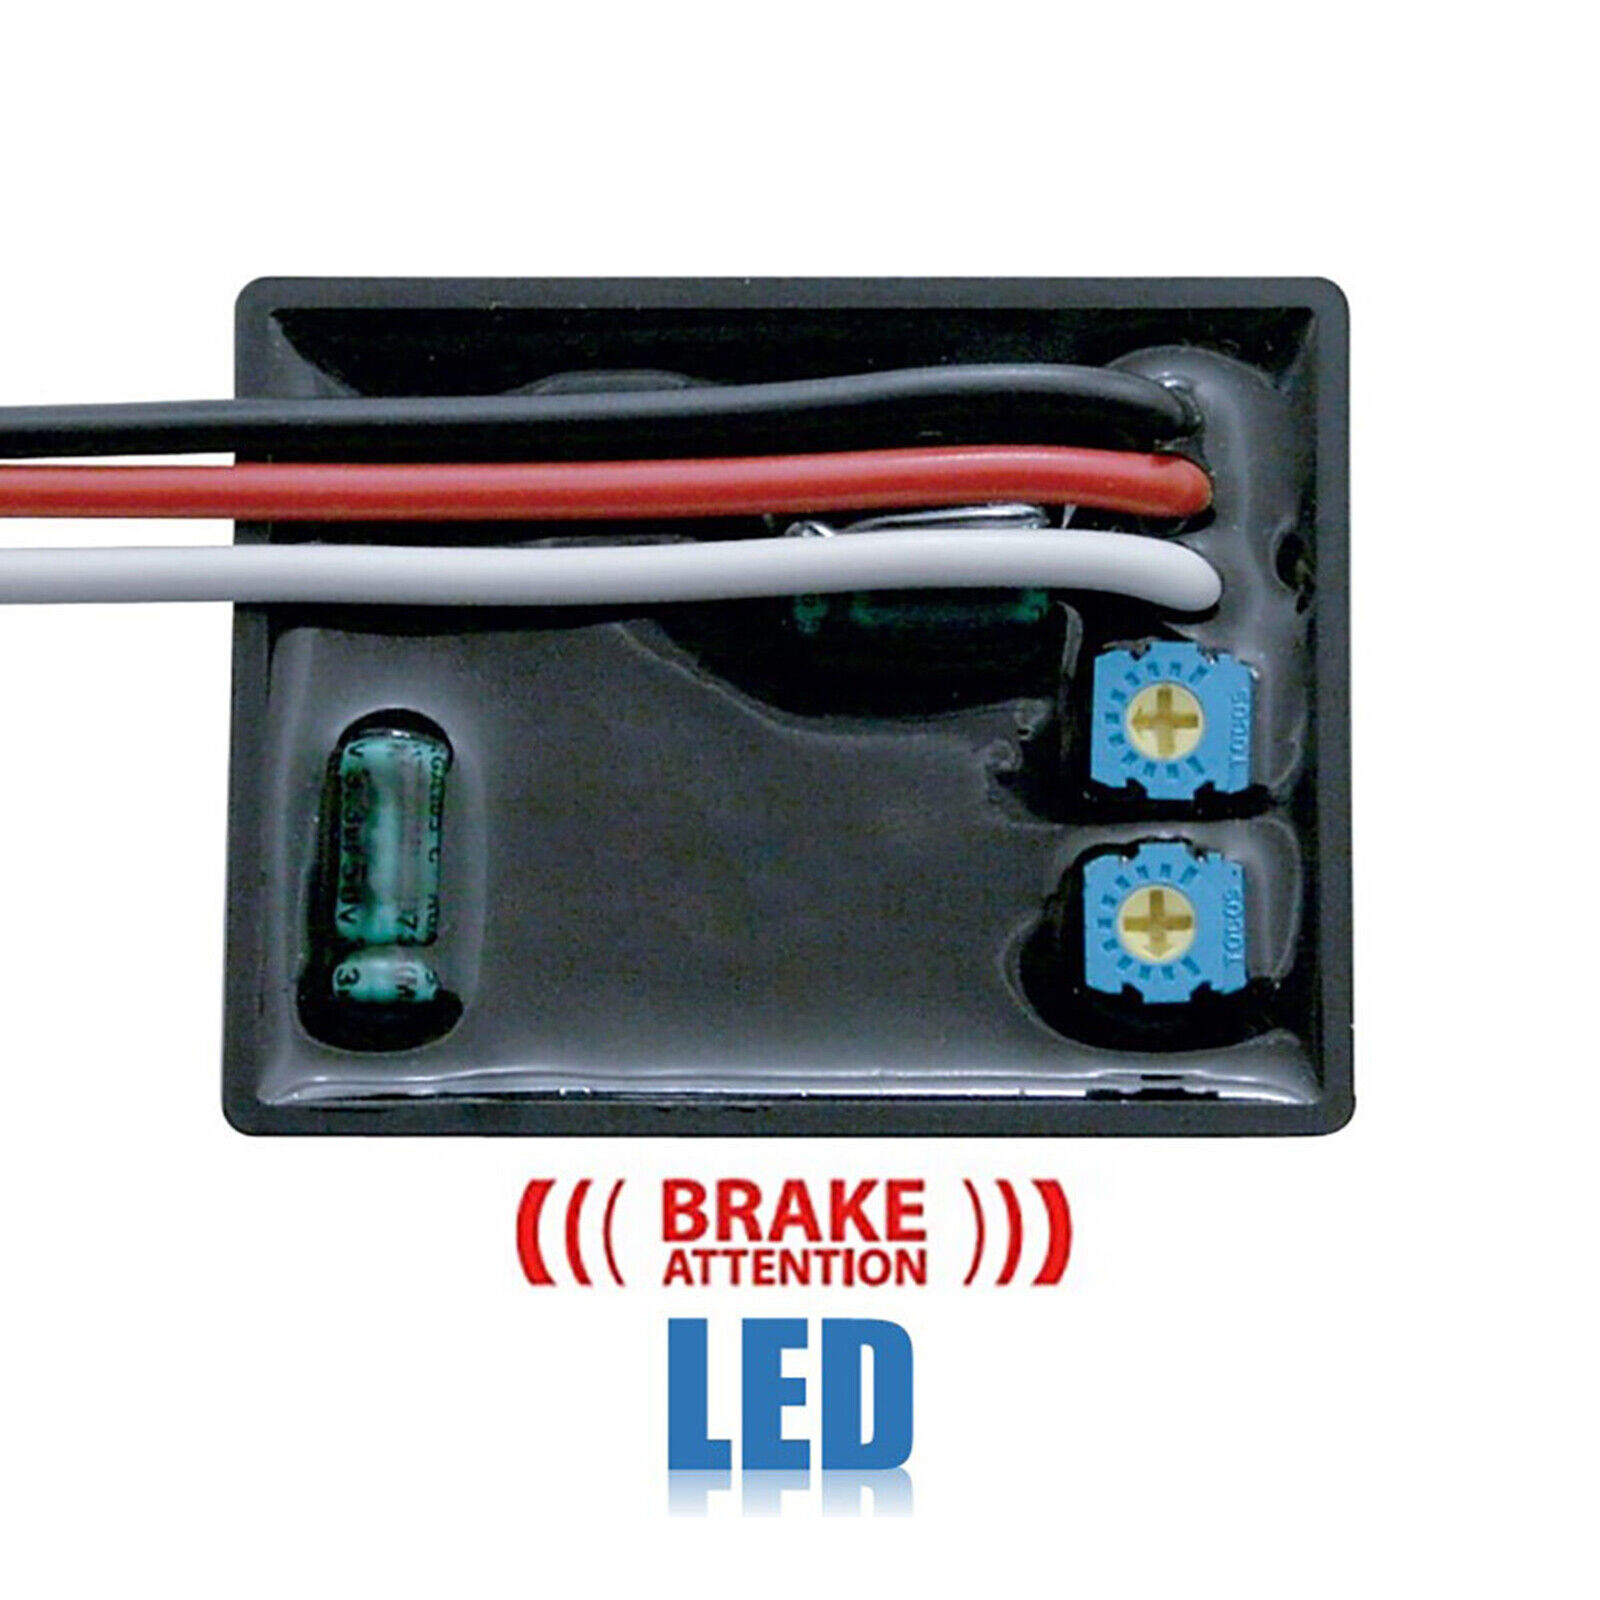 LED Brake Light Attention Flasher Adjustable Module Rapid Flash Max. 1.5 Amp 